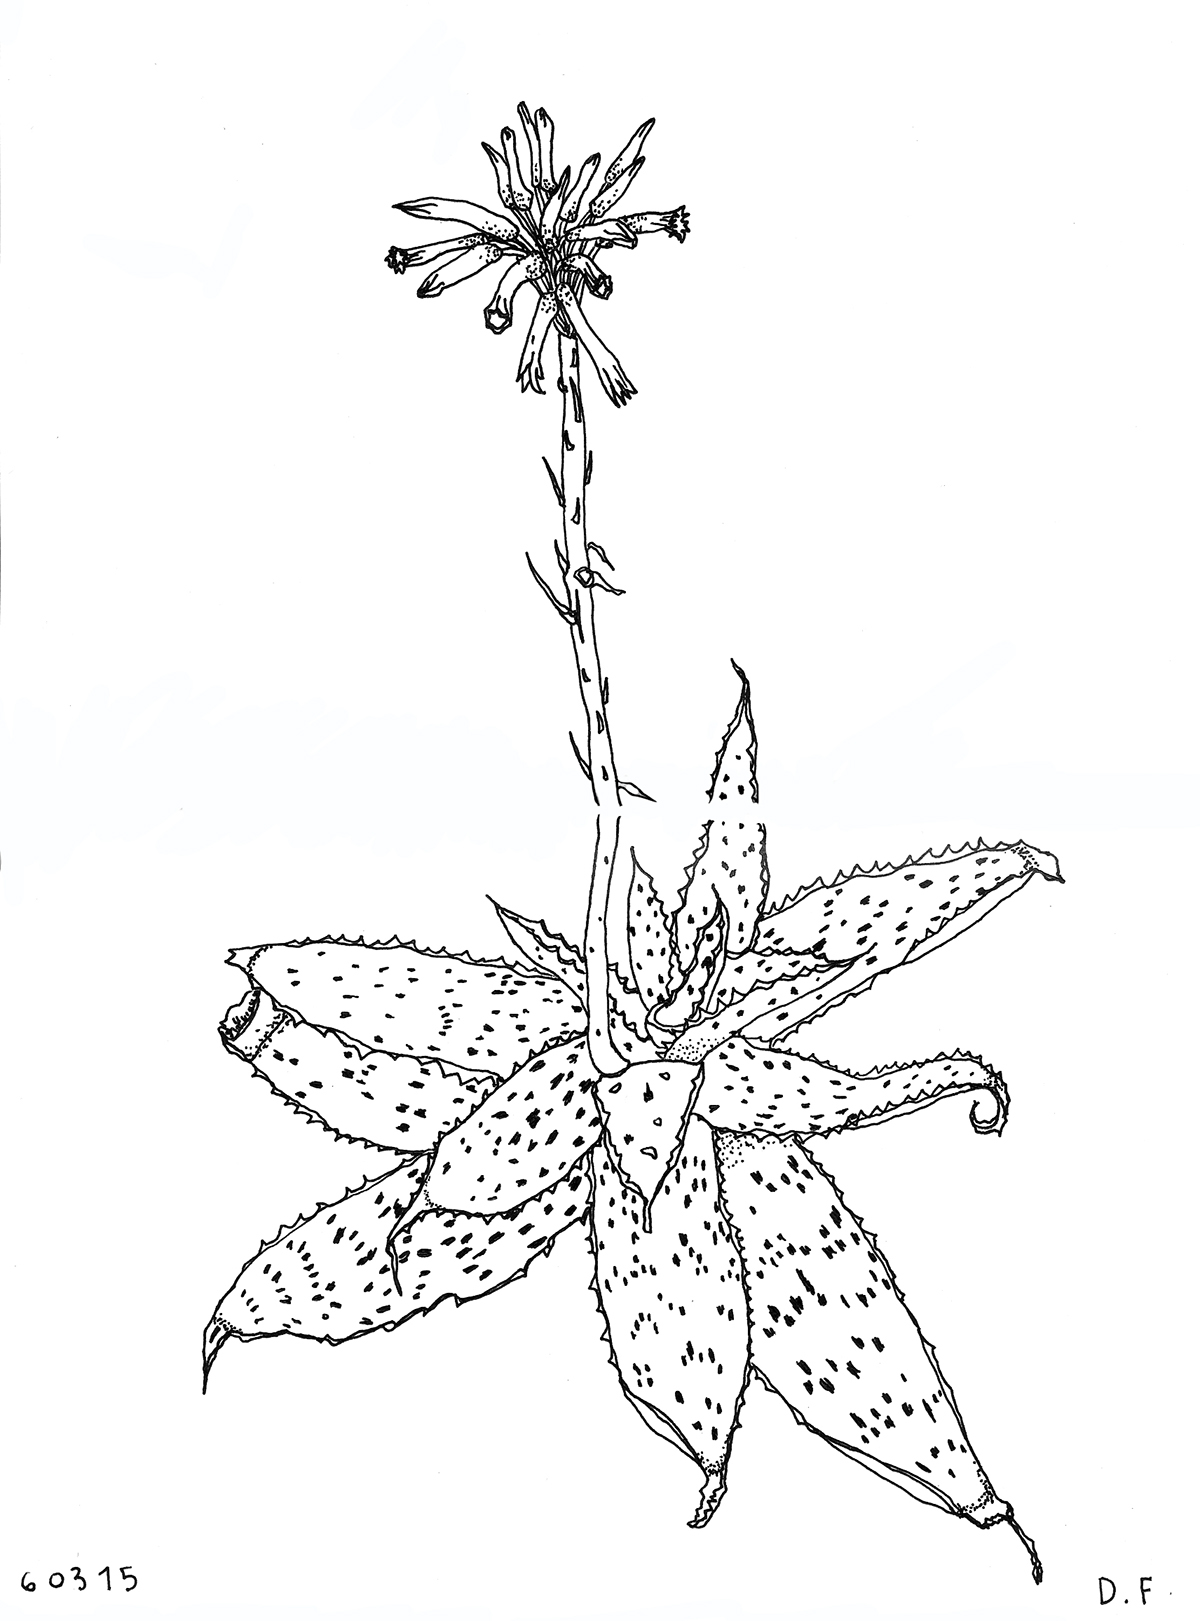 cactus cacti cactos mexico usa Cuadernodeviaje dibujos publication fanzine selfpublished risograph plants